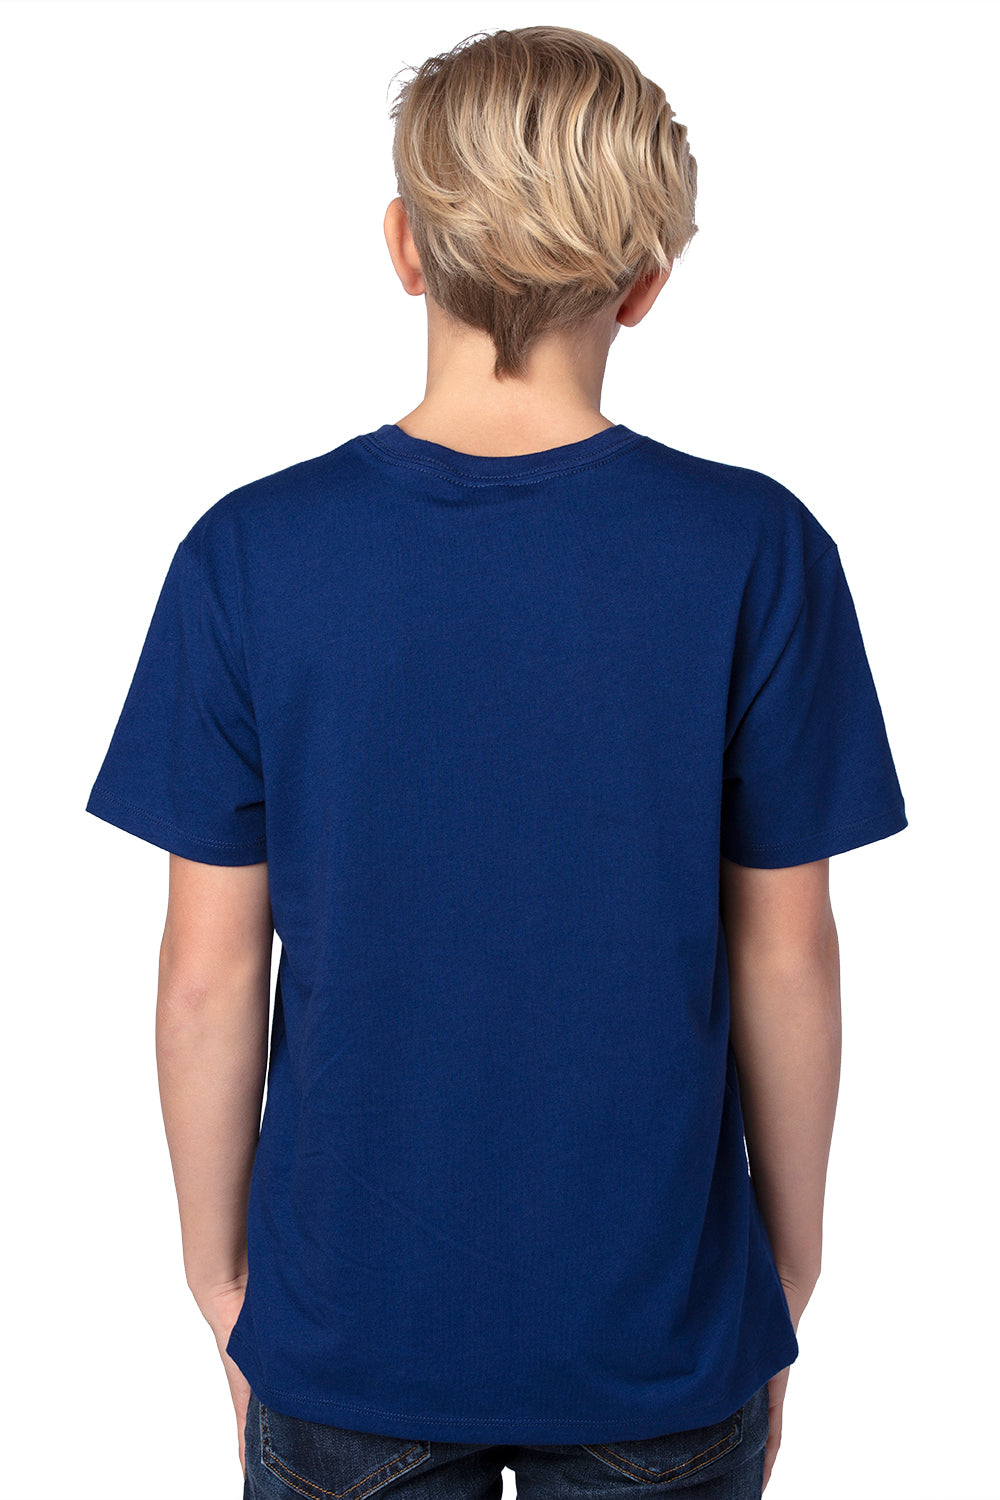 Threadfast Apparel 600A Youth Ultimate Short Sleeve Crewneck T-Shirt Navy Blue Back